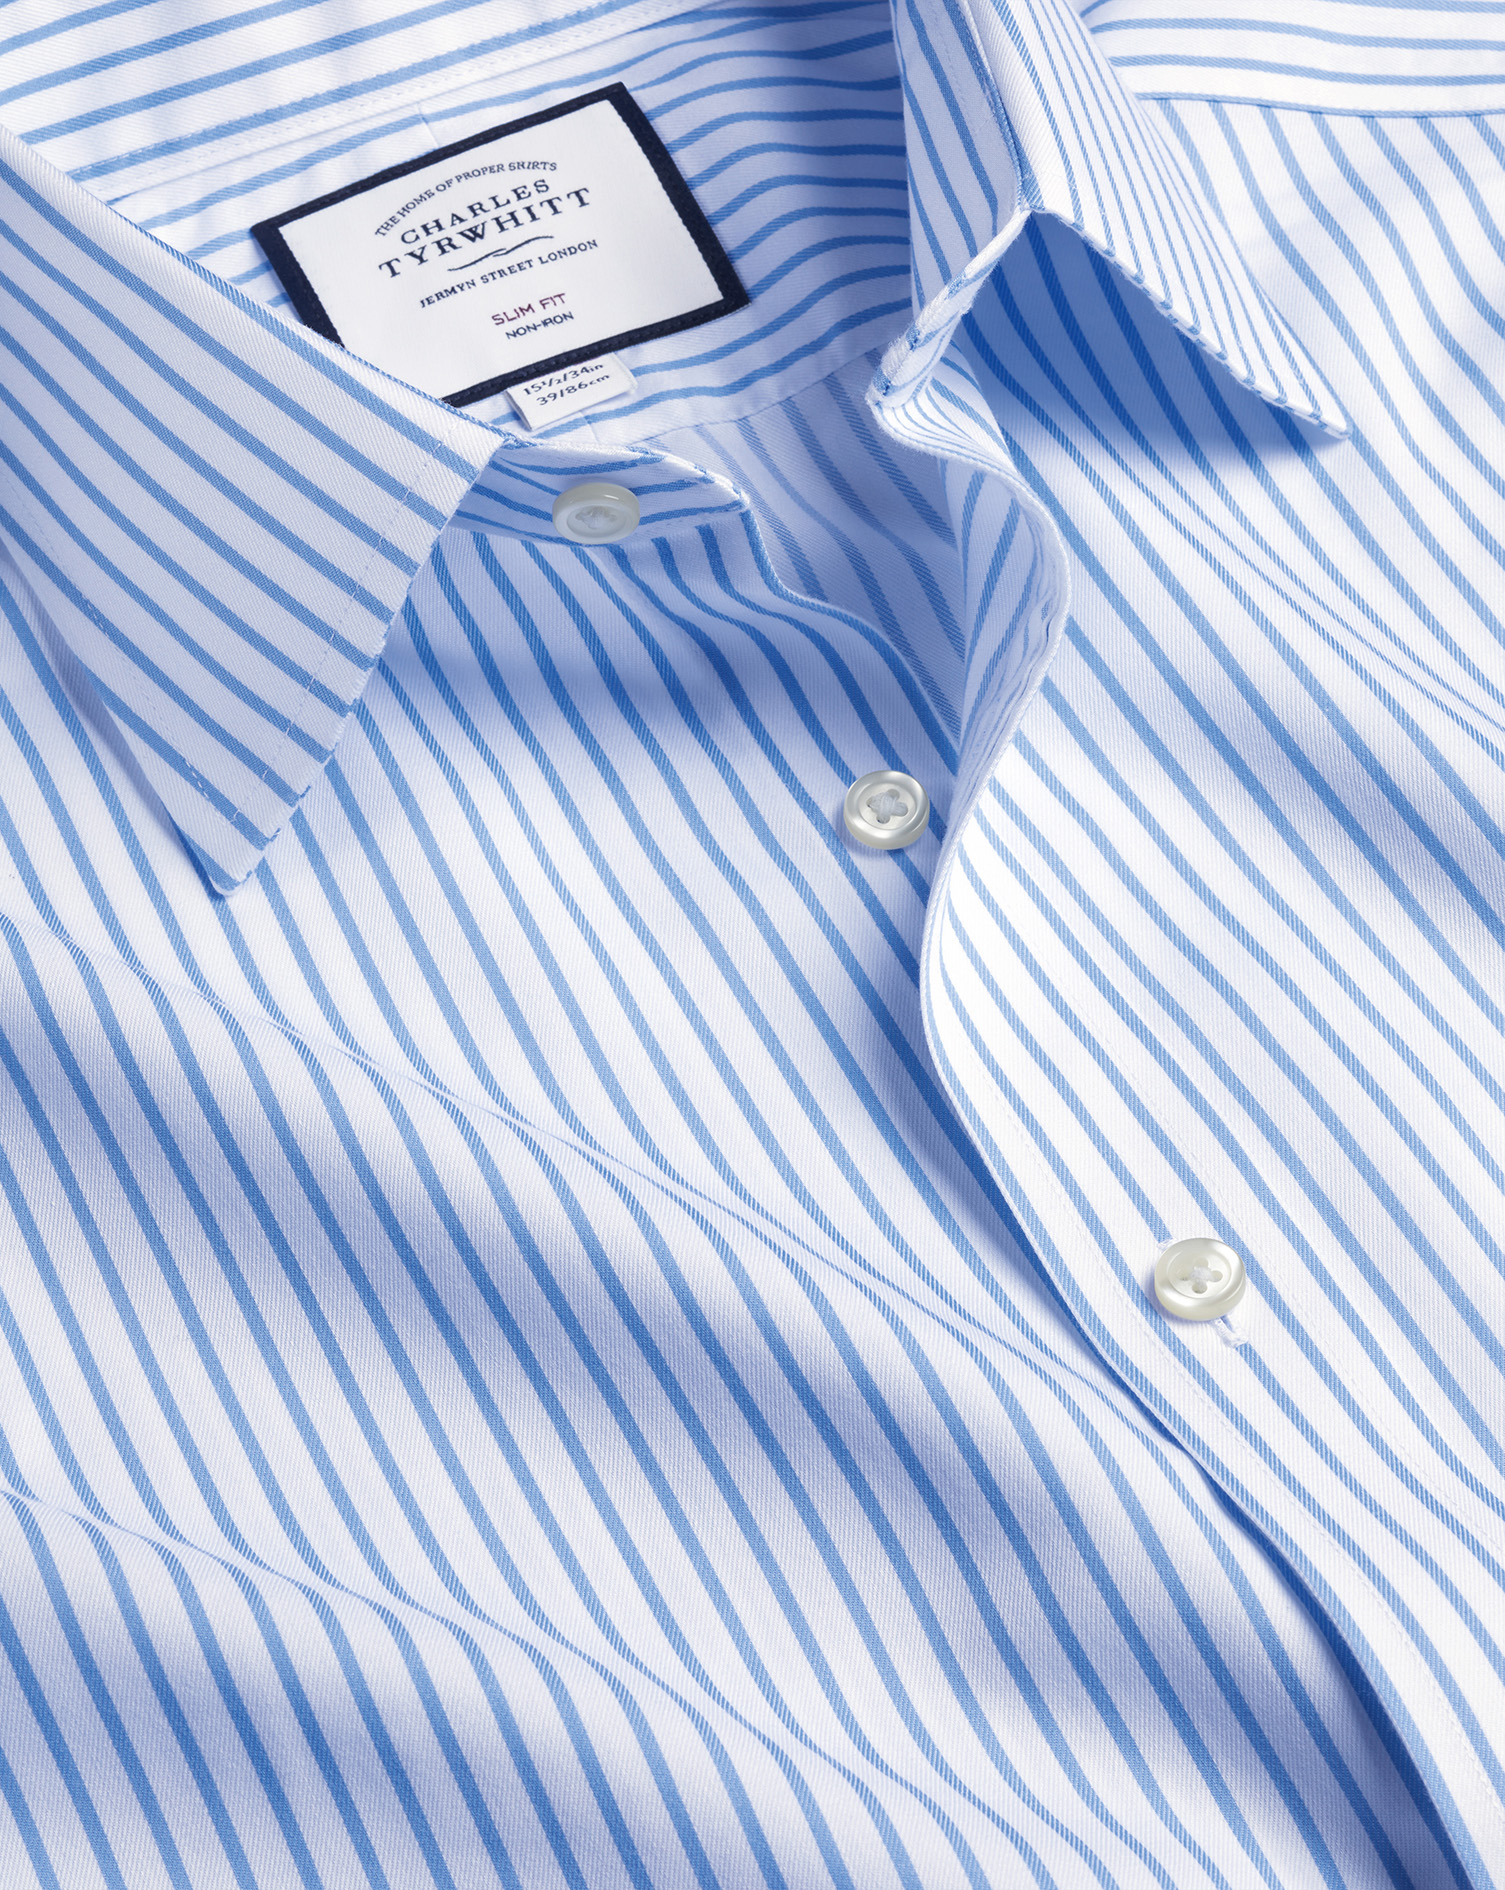 Men's Charles Tyrwhitt Non-Iron Twill Stripe Dress Shirt - Cornflower Blue Single Cuff Size XL Cotto